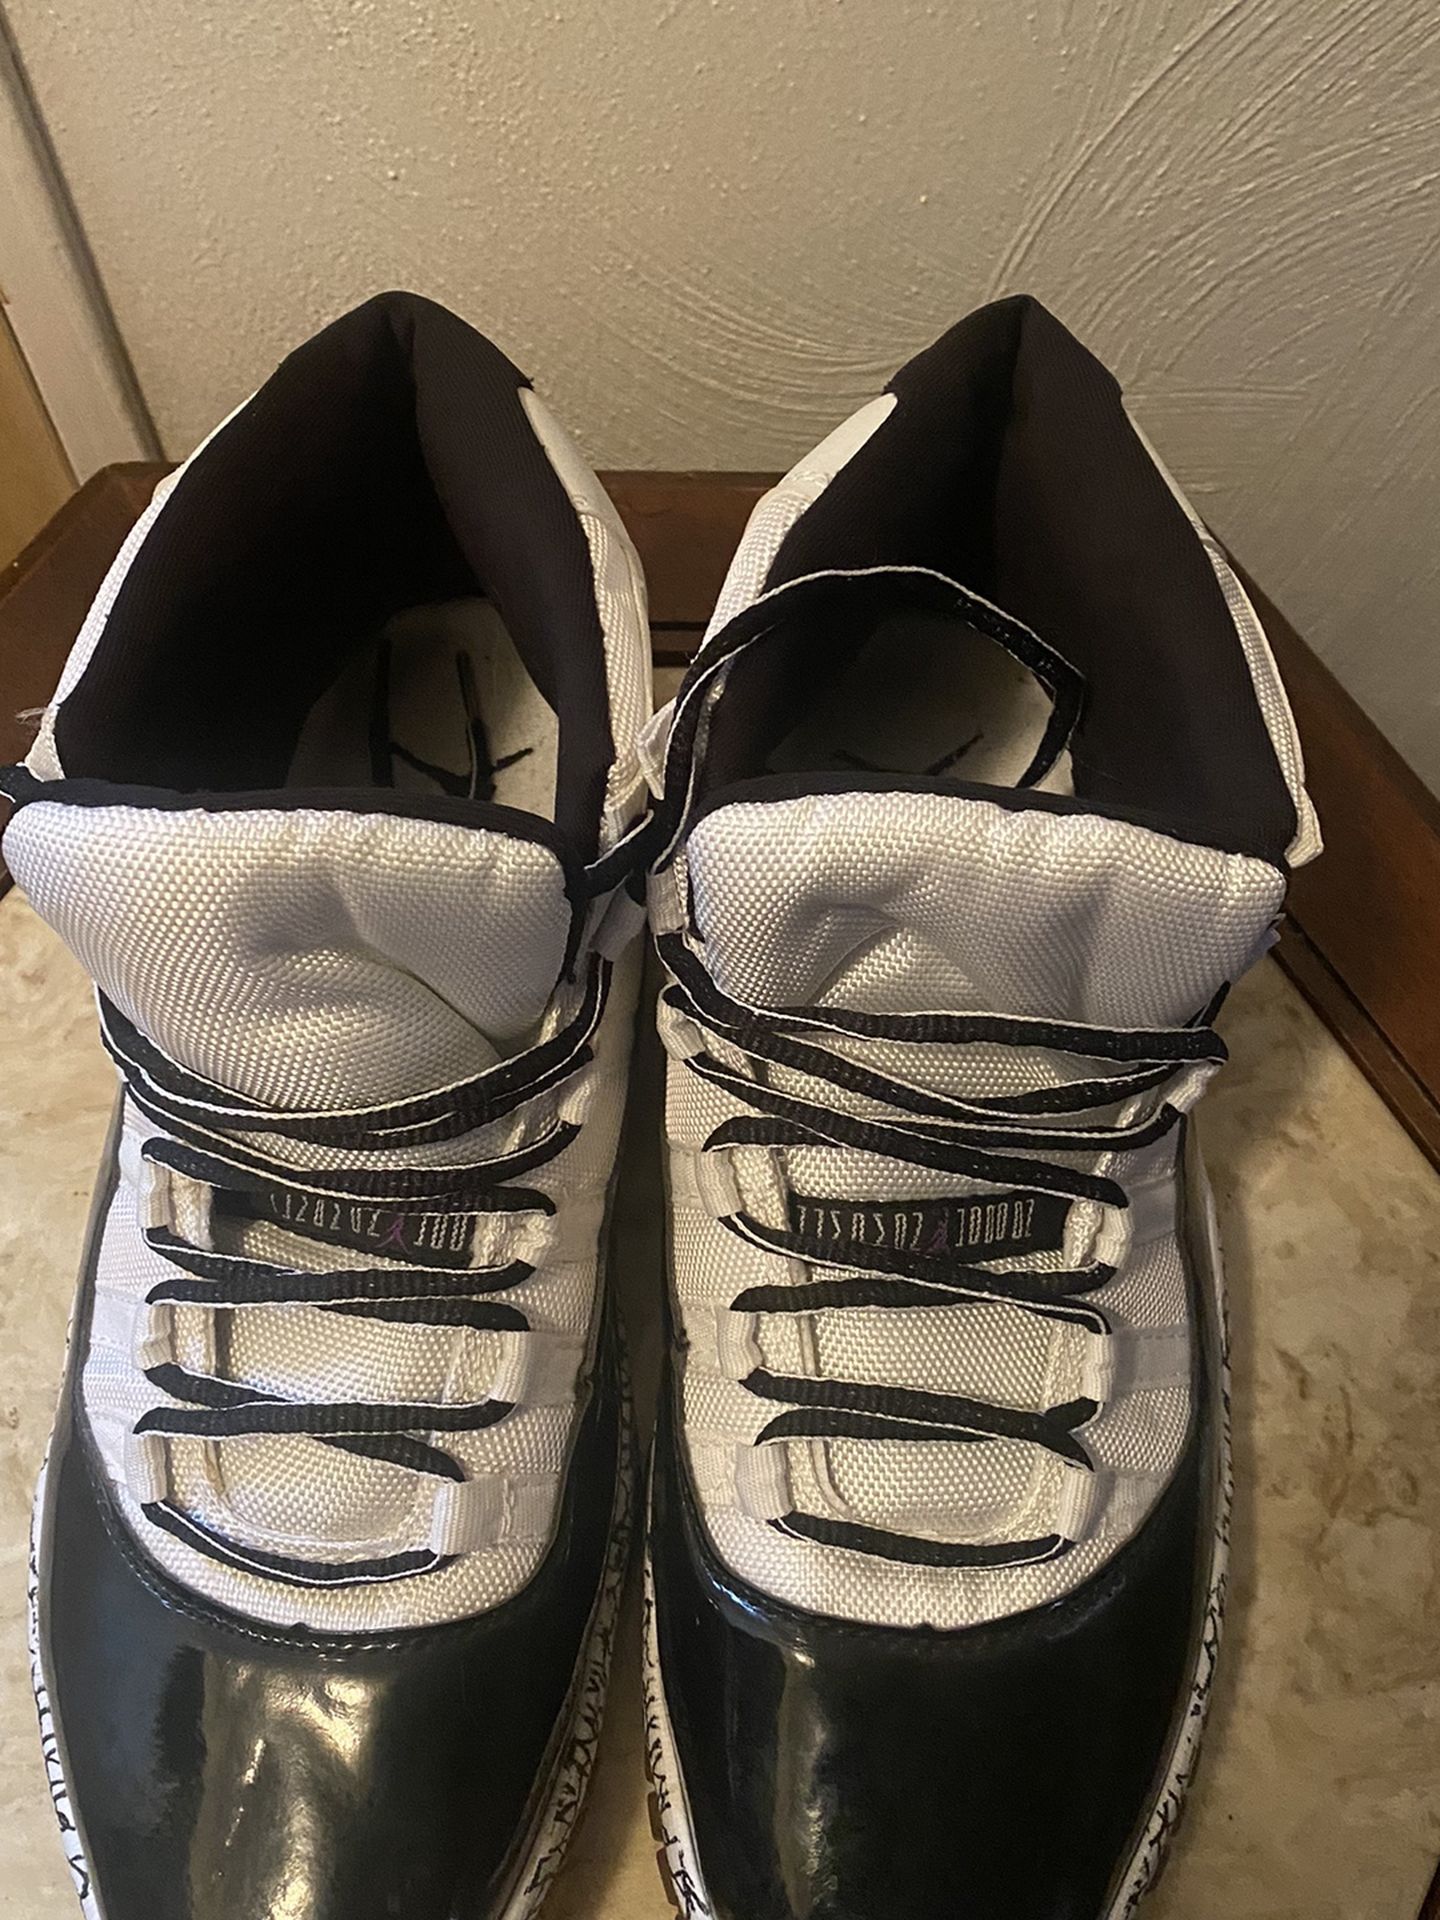 Size 13 - Jordans